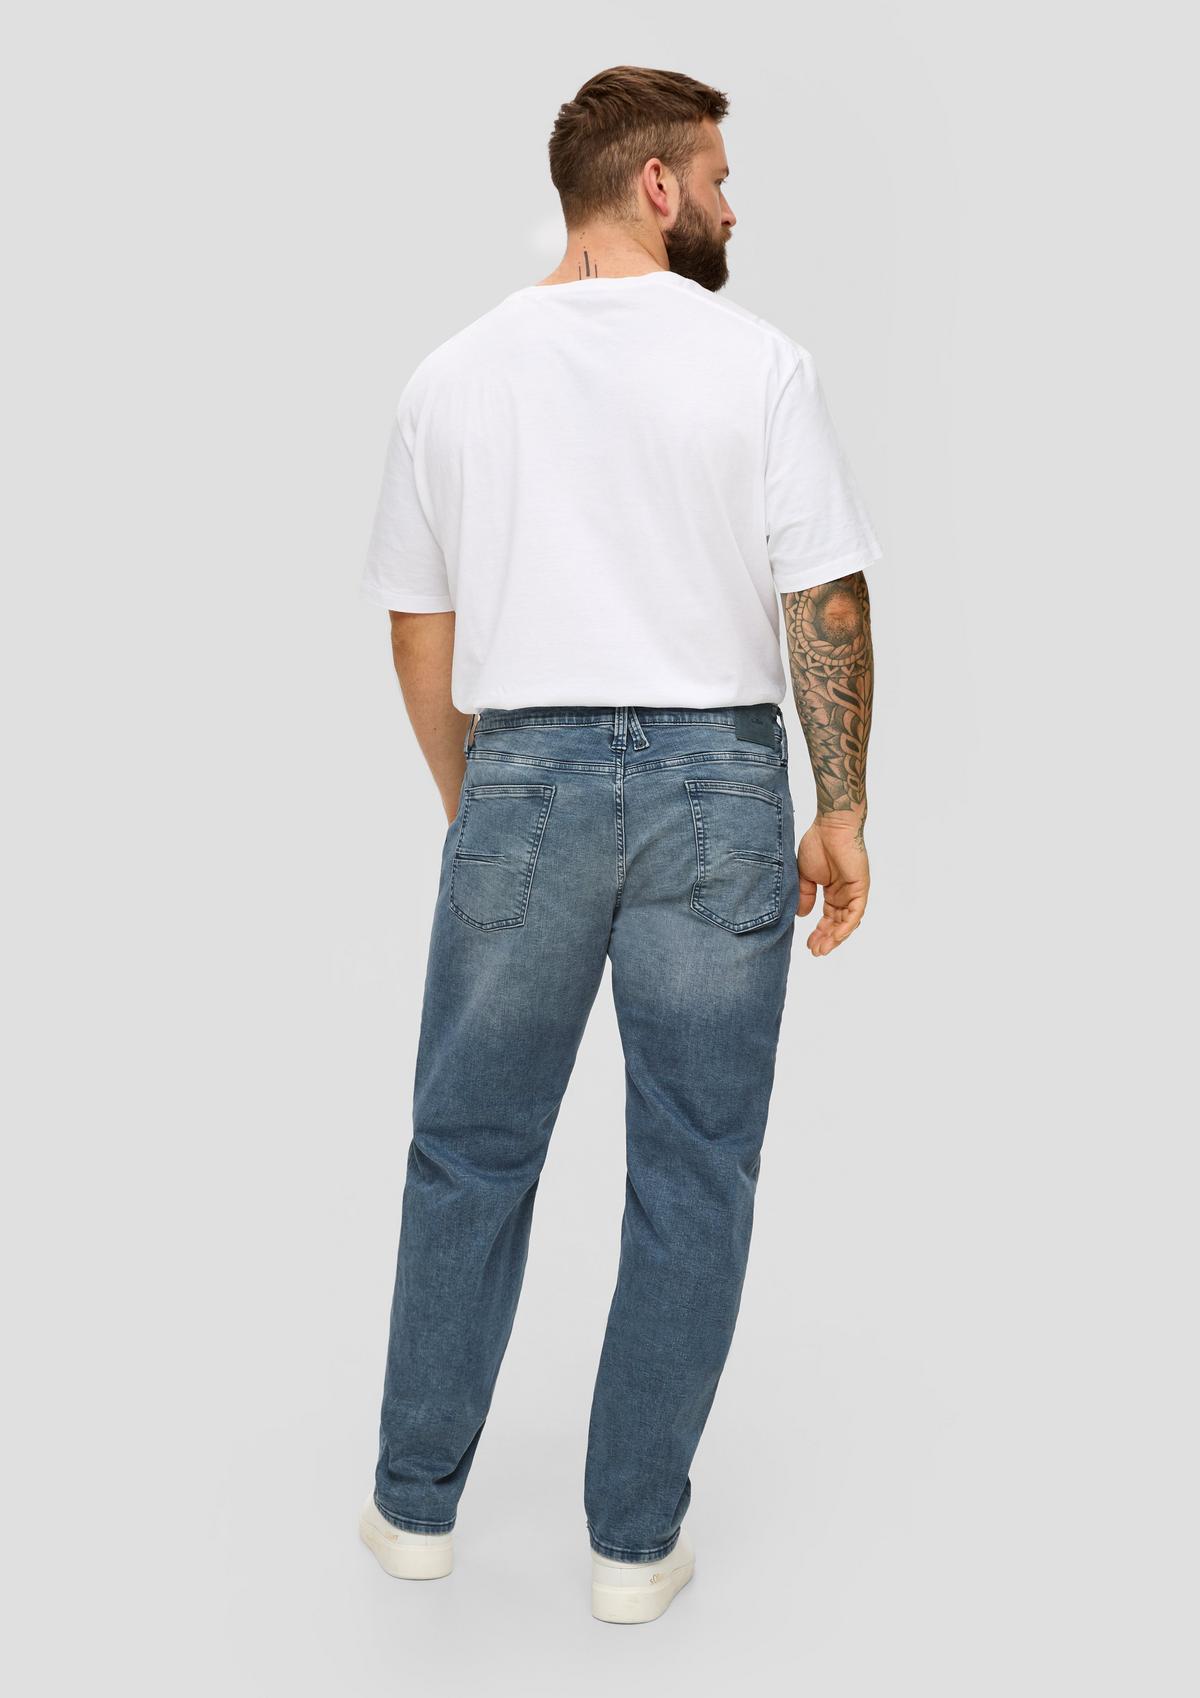 s.Oliver Jeans York / Regular Fit / Mid Rise / Regular Leg